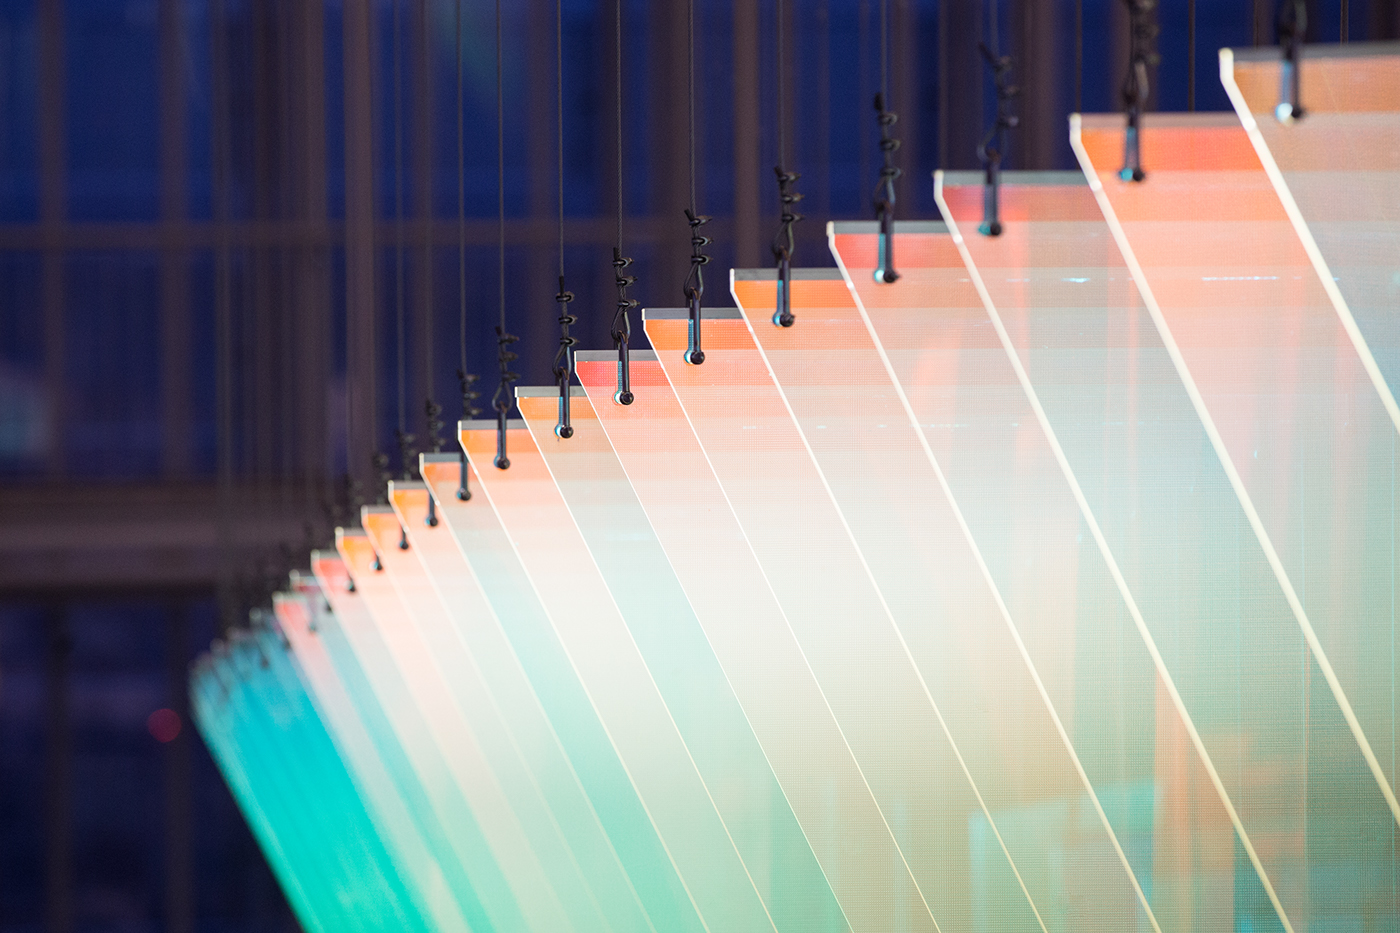 intesa sanpaolo installation lightart light lighting art torino colors wave of colours